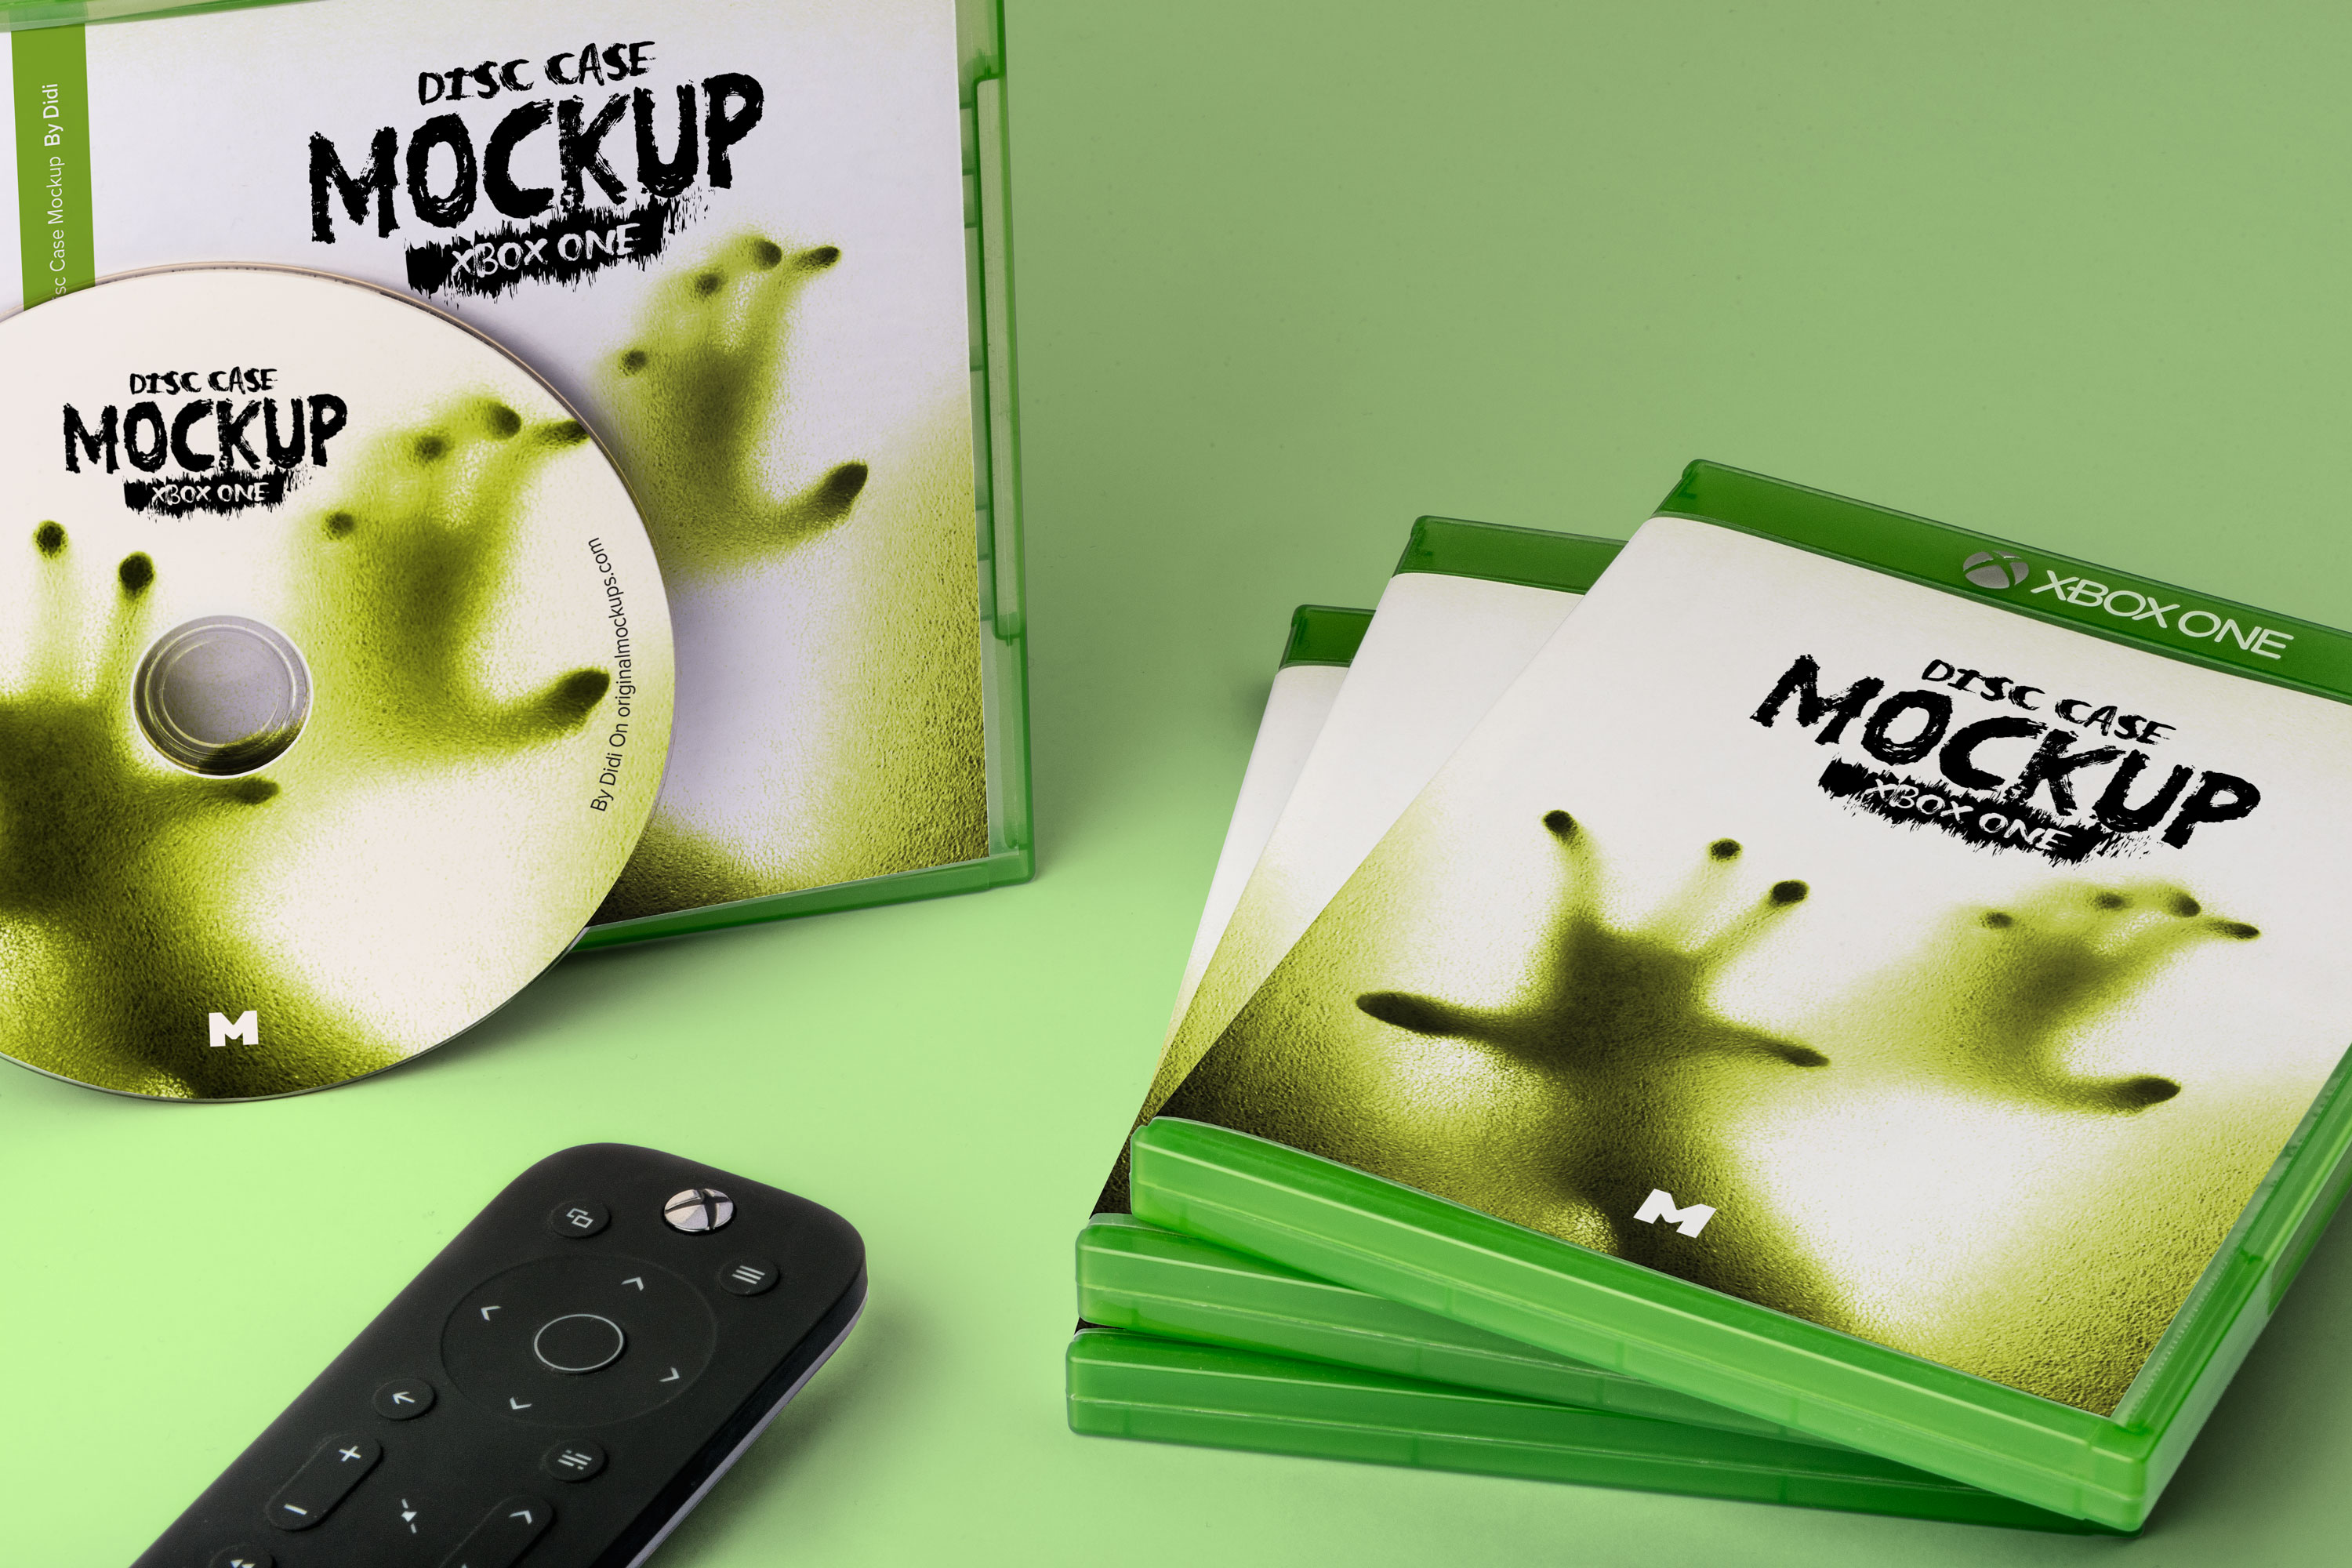 Xbox One游戏光盘封面＆包装设计效果图样机 Xbox One Disc Case Mockup插图(3)